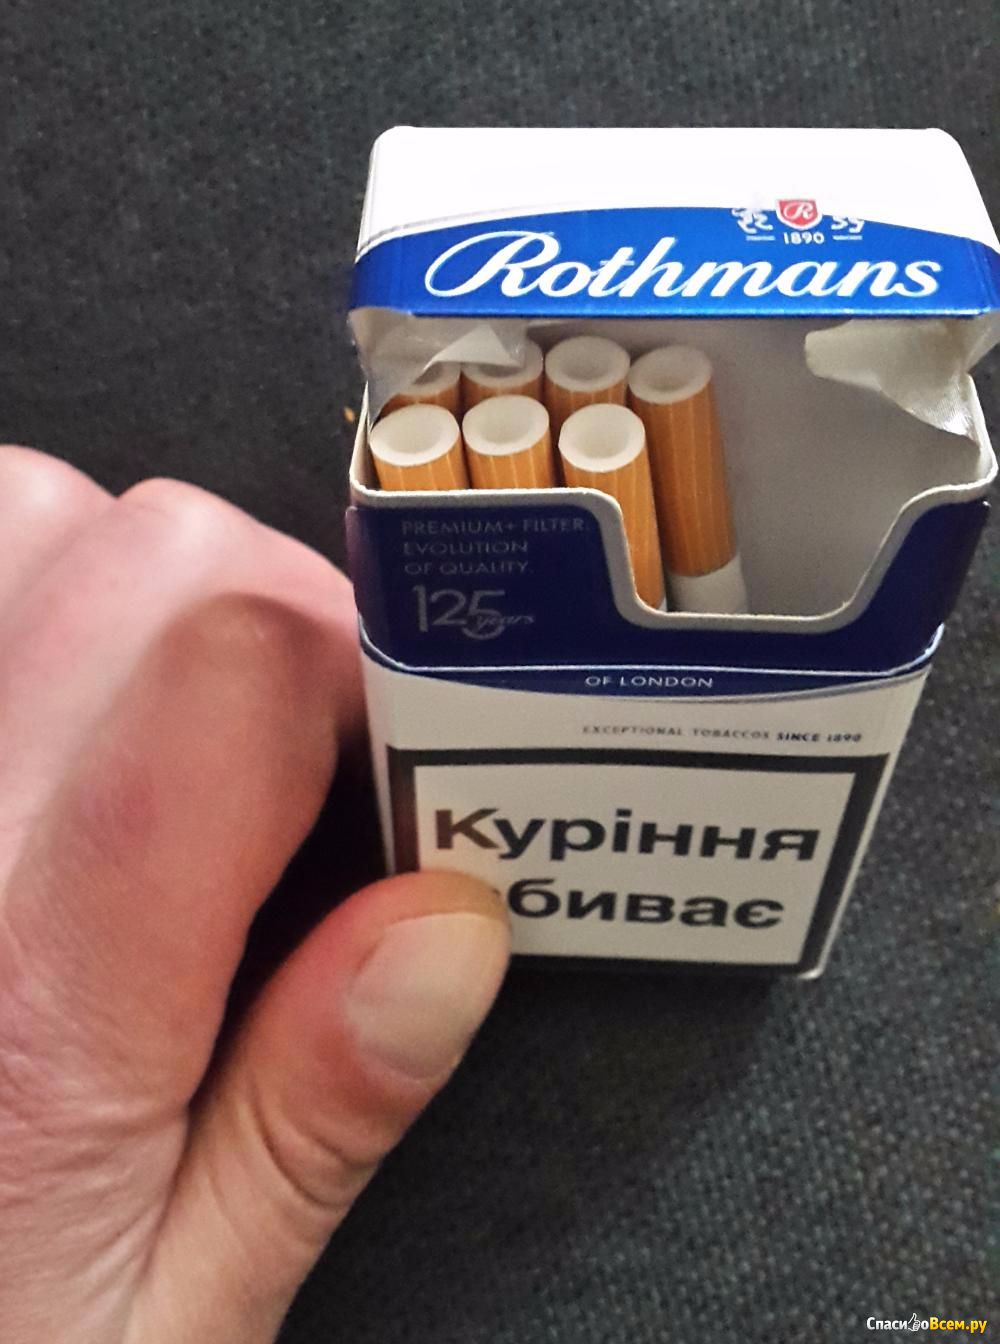 Ротманс компакт синий. Сигареты Rothmans Compact. Сигареты ротманс компакт Блю. Сигареты ротманс деми. Rothmans линейка сигарет.